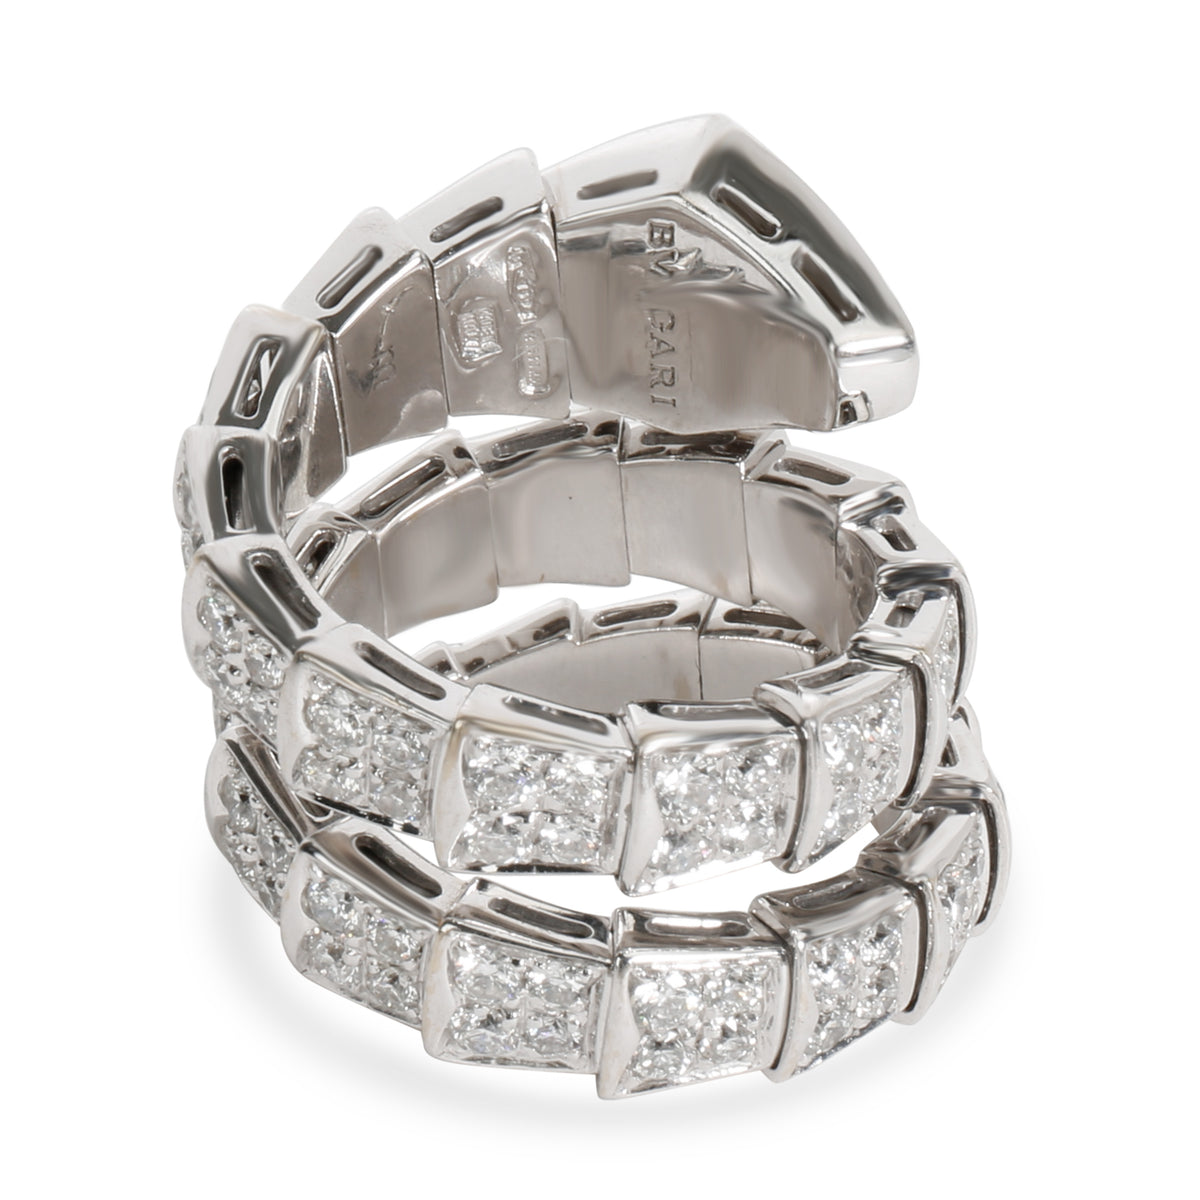 Bulgari Serpenti Diamond Ring in 18K White Gold 4 CTW